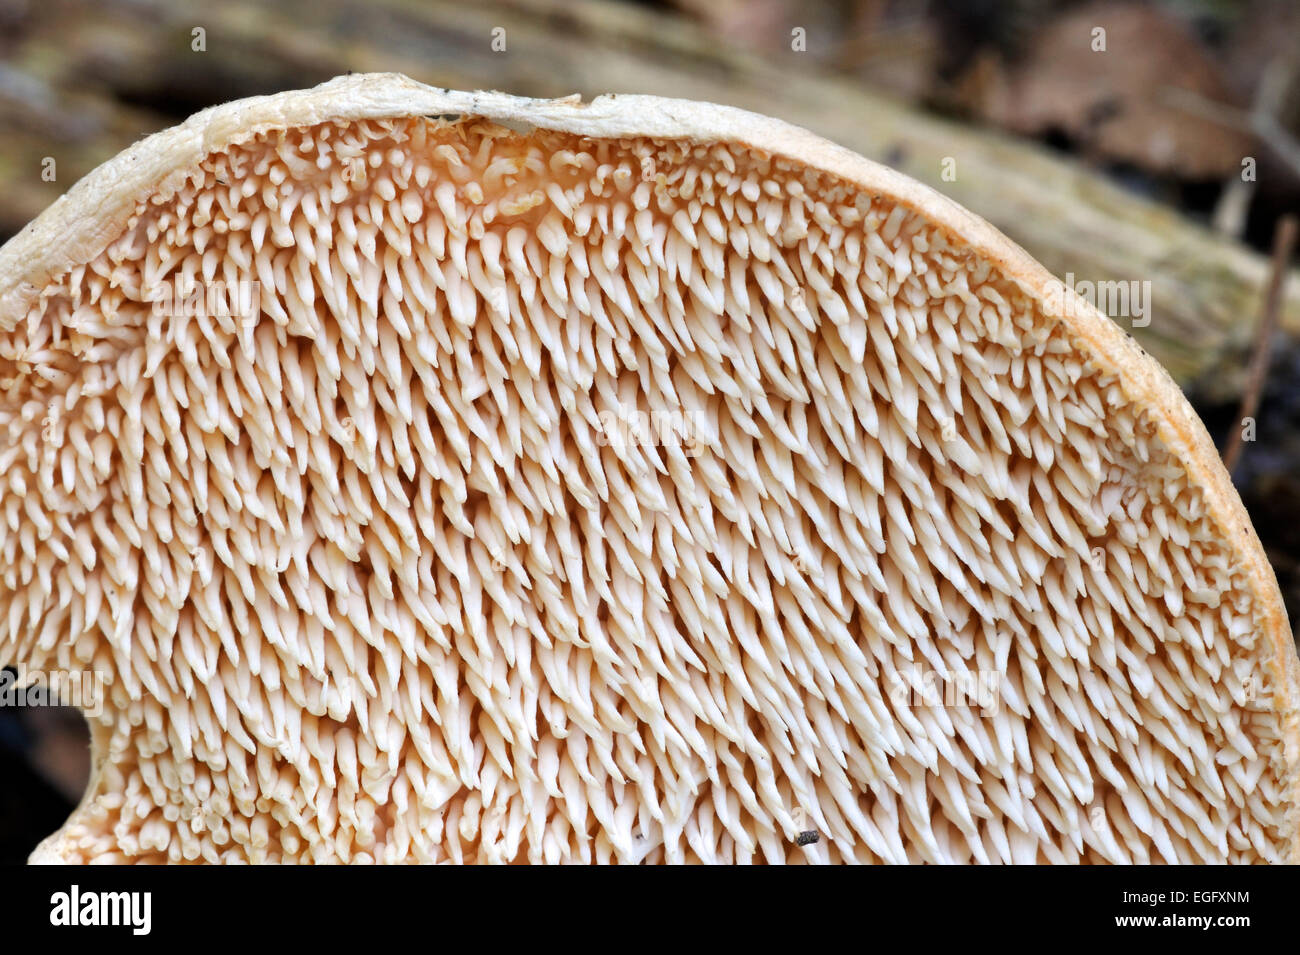 Süßes / Holz Igel / Igel Pilz (Hydnum Repandum) Unterseite zeigt Stacheln Stockfoto